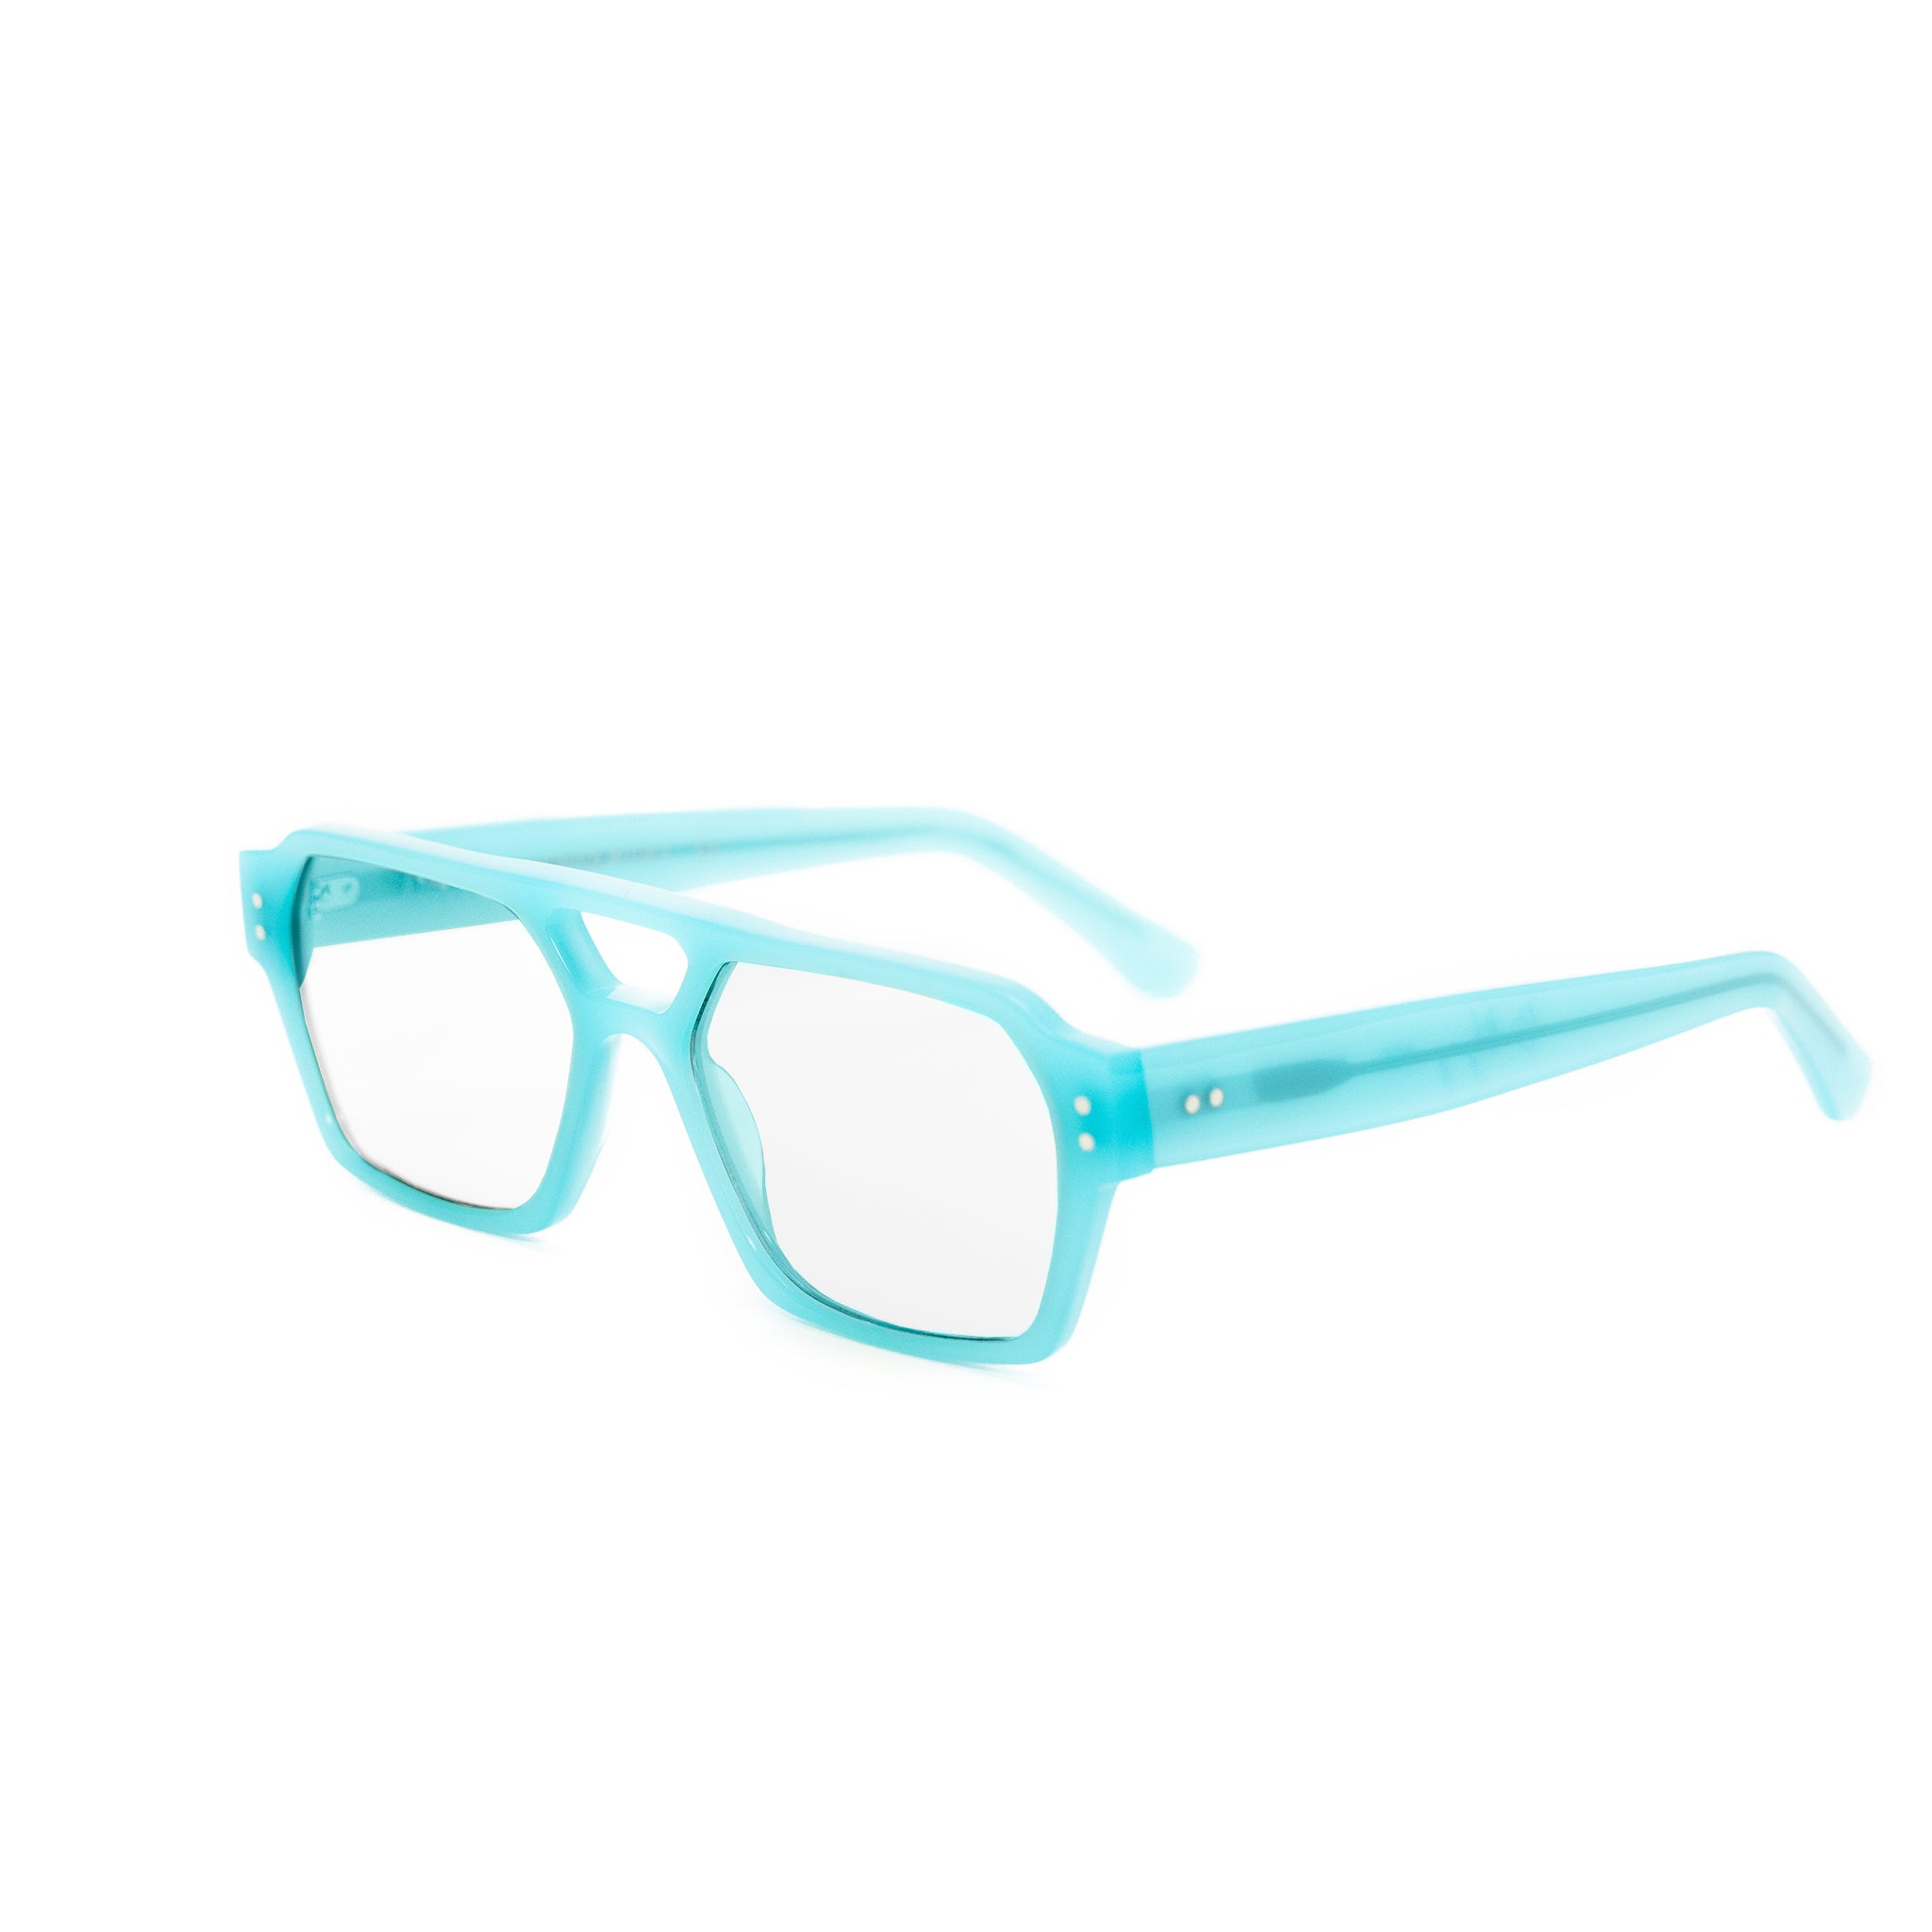 Ego optical glasses in opal blue from Ameos Eyewear.